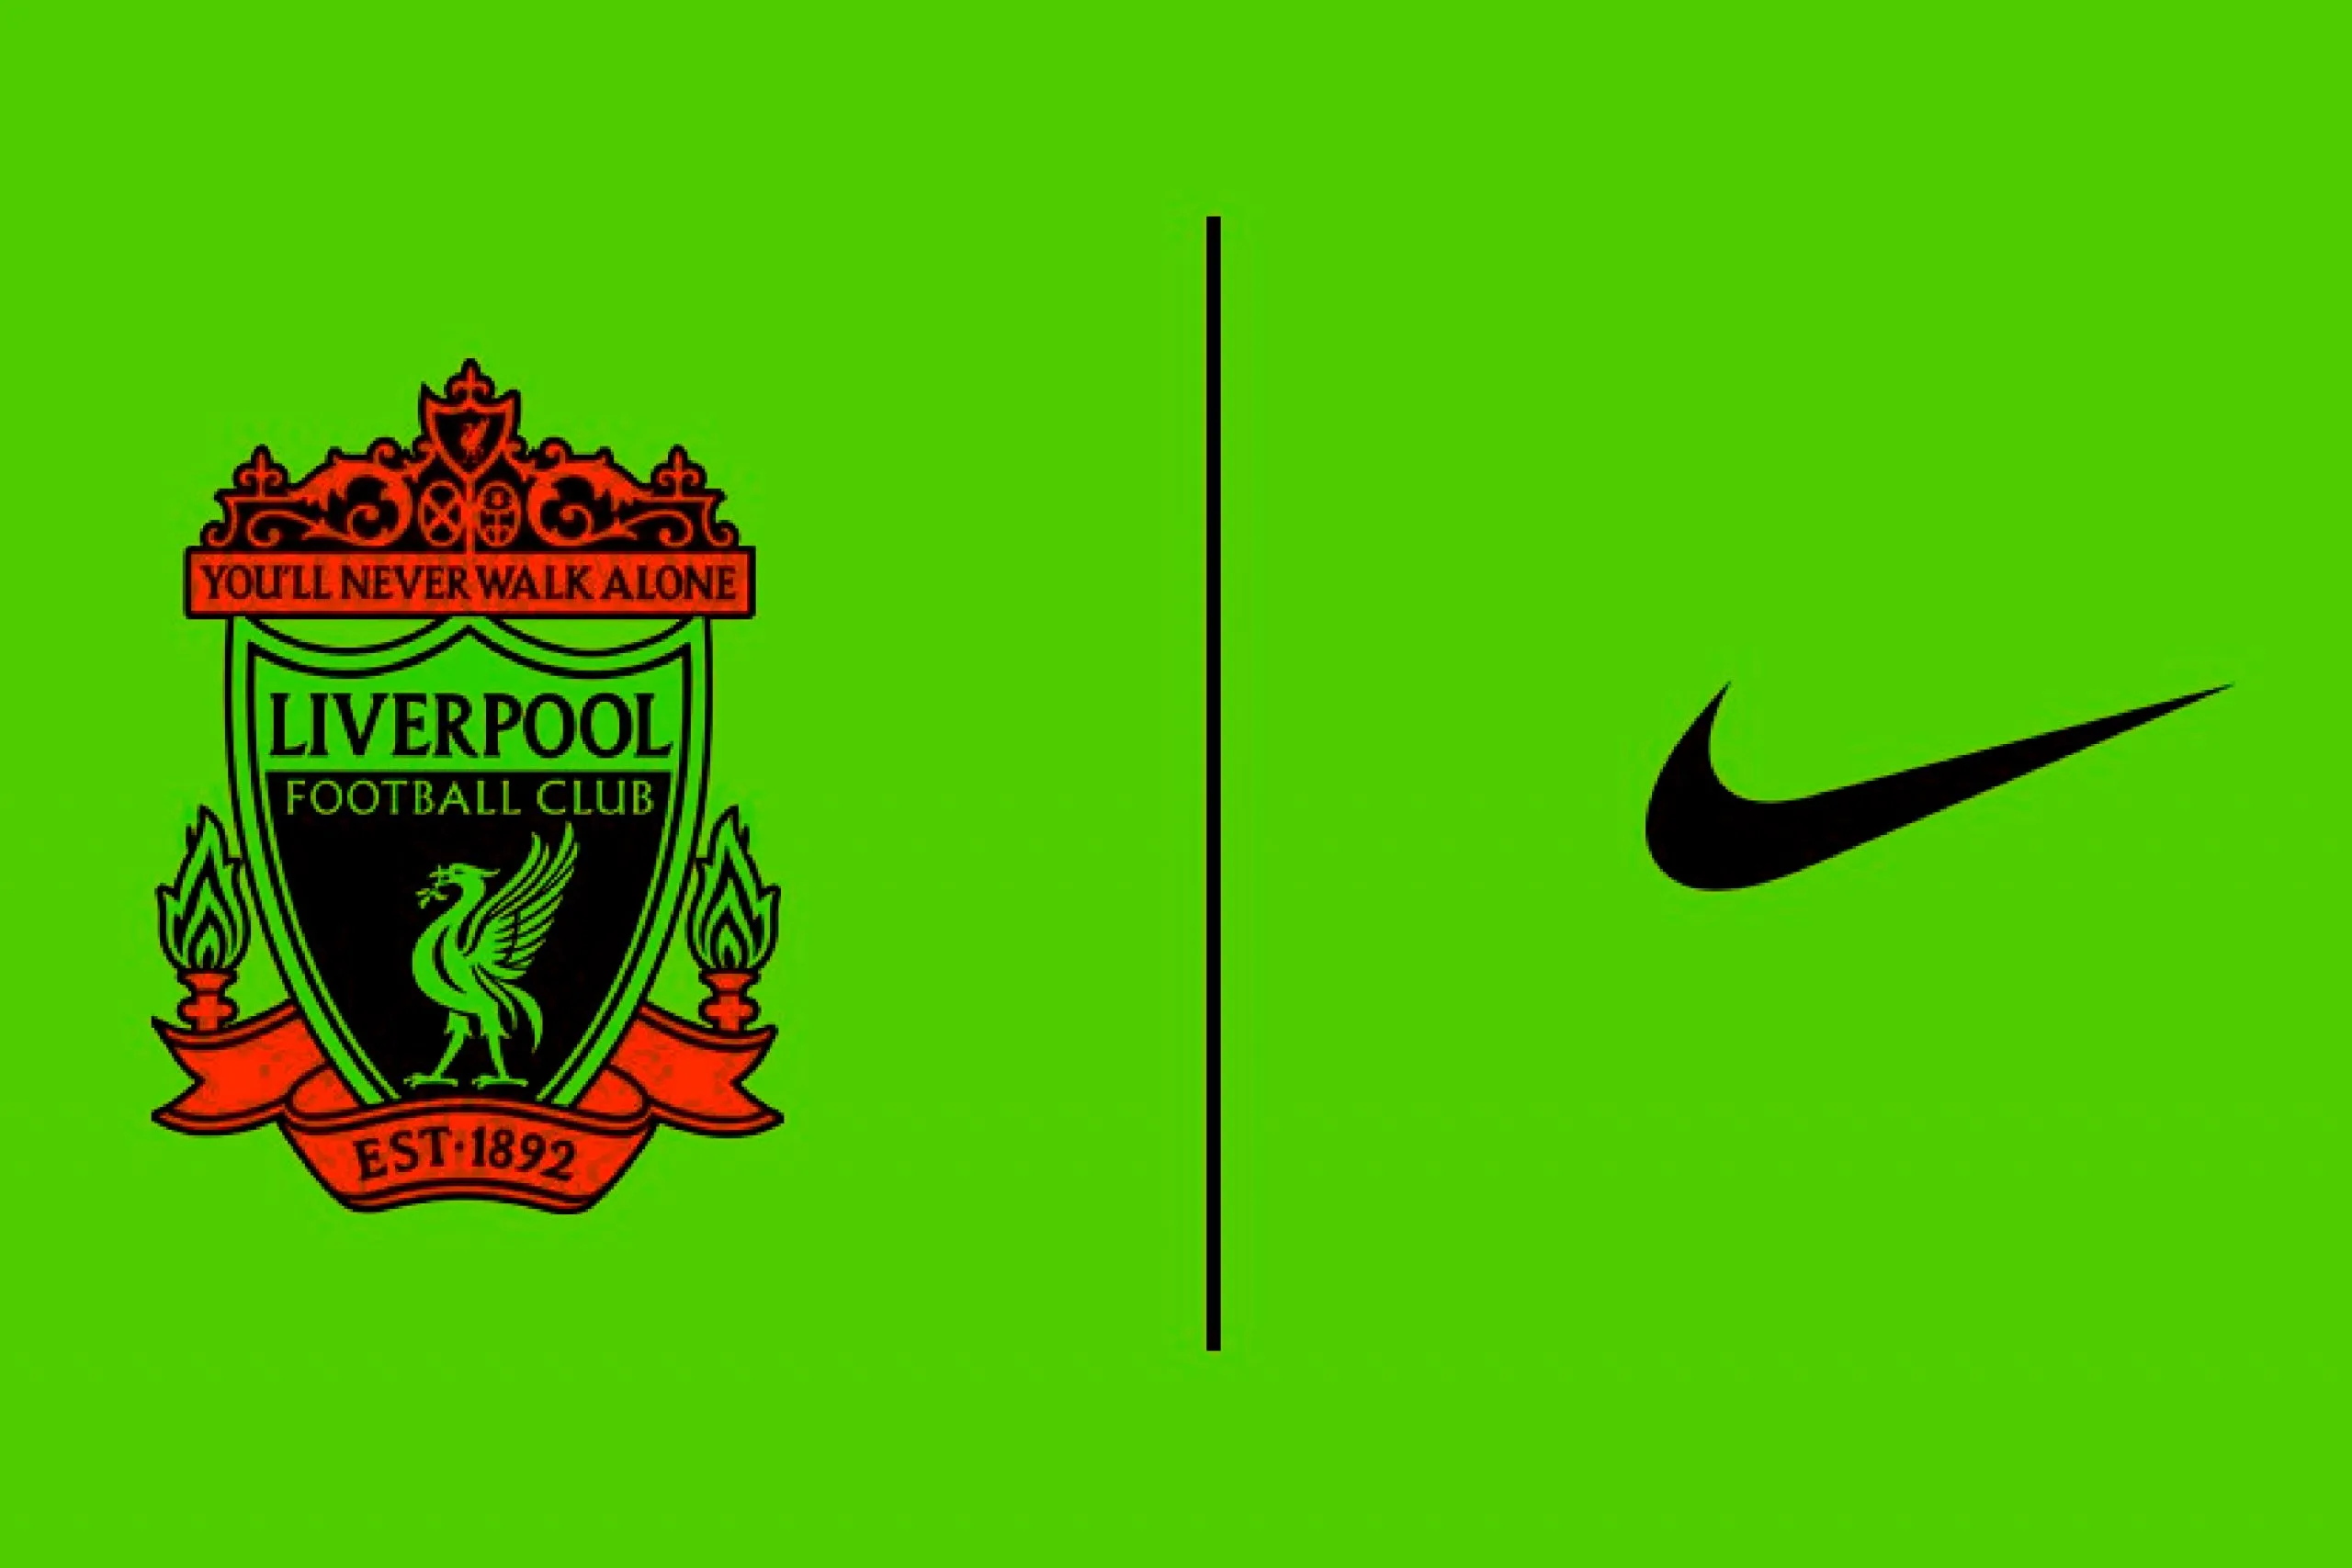 Liverpool and Nike logo